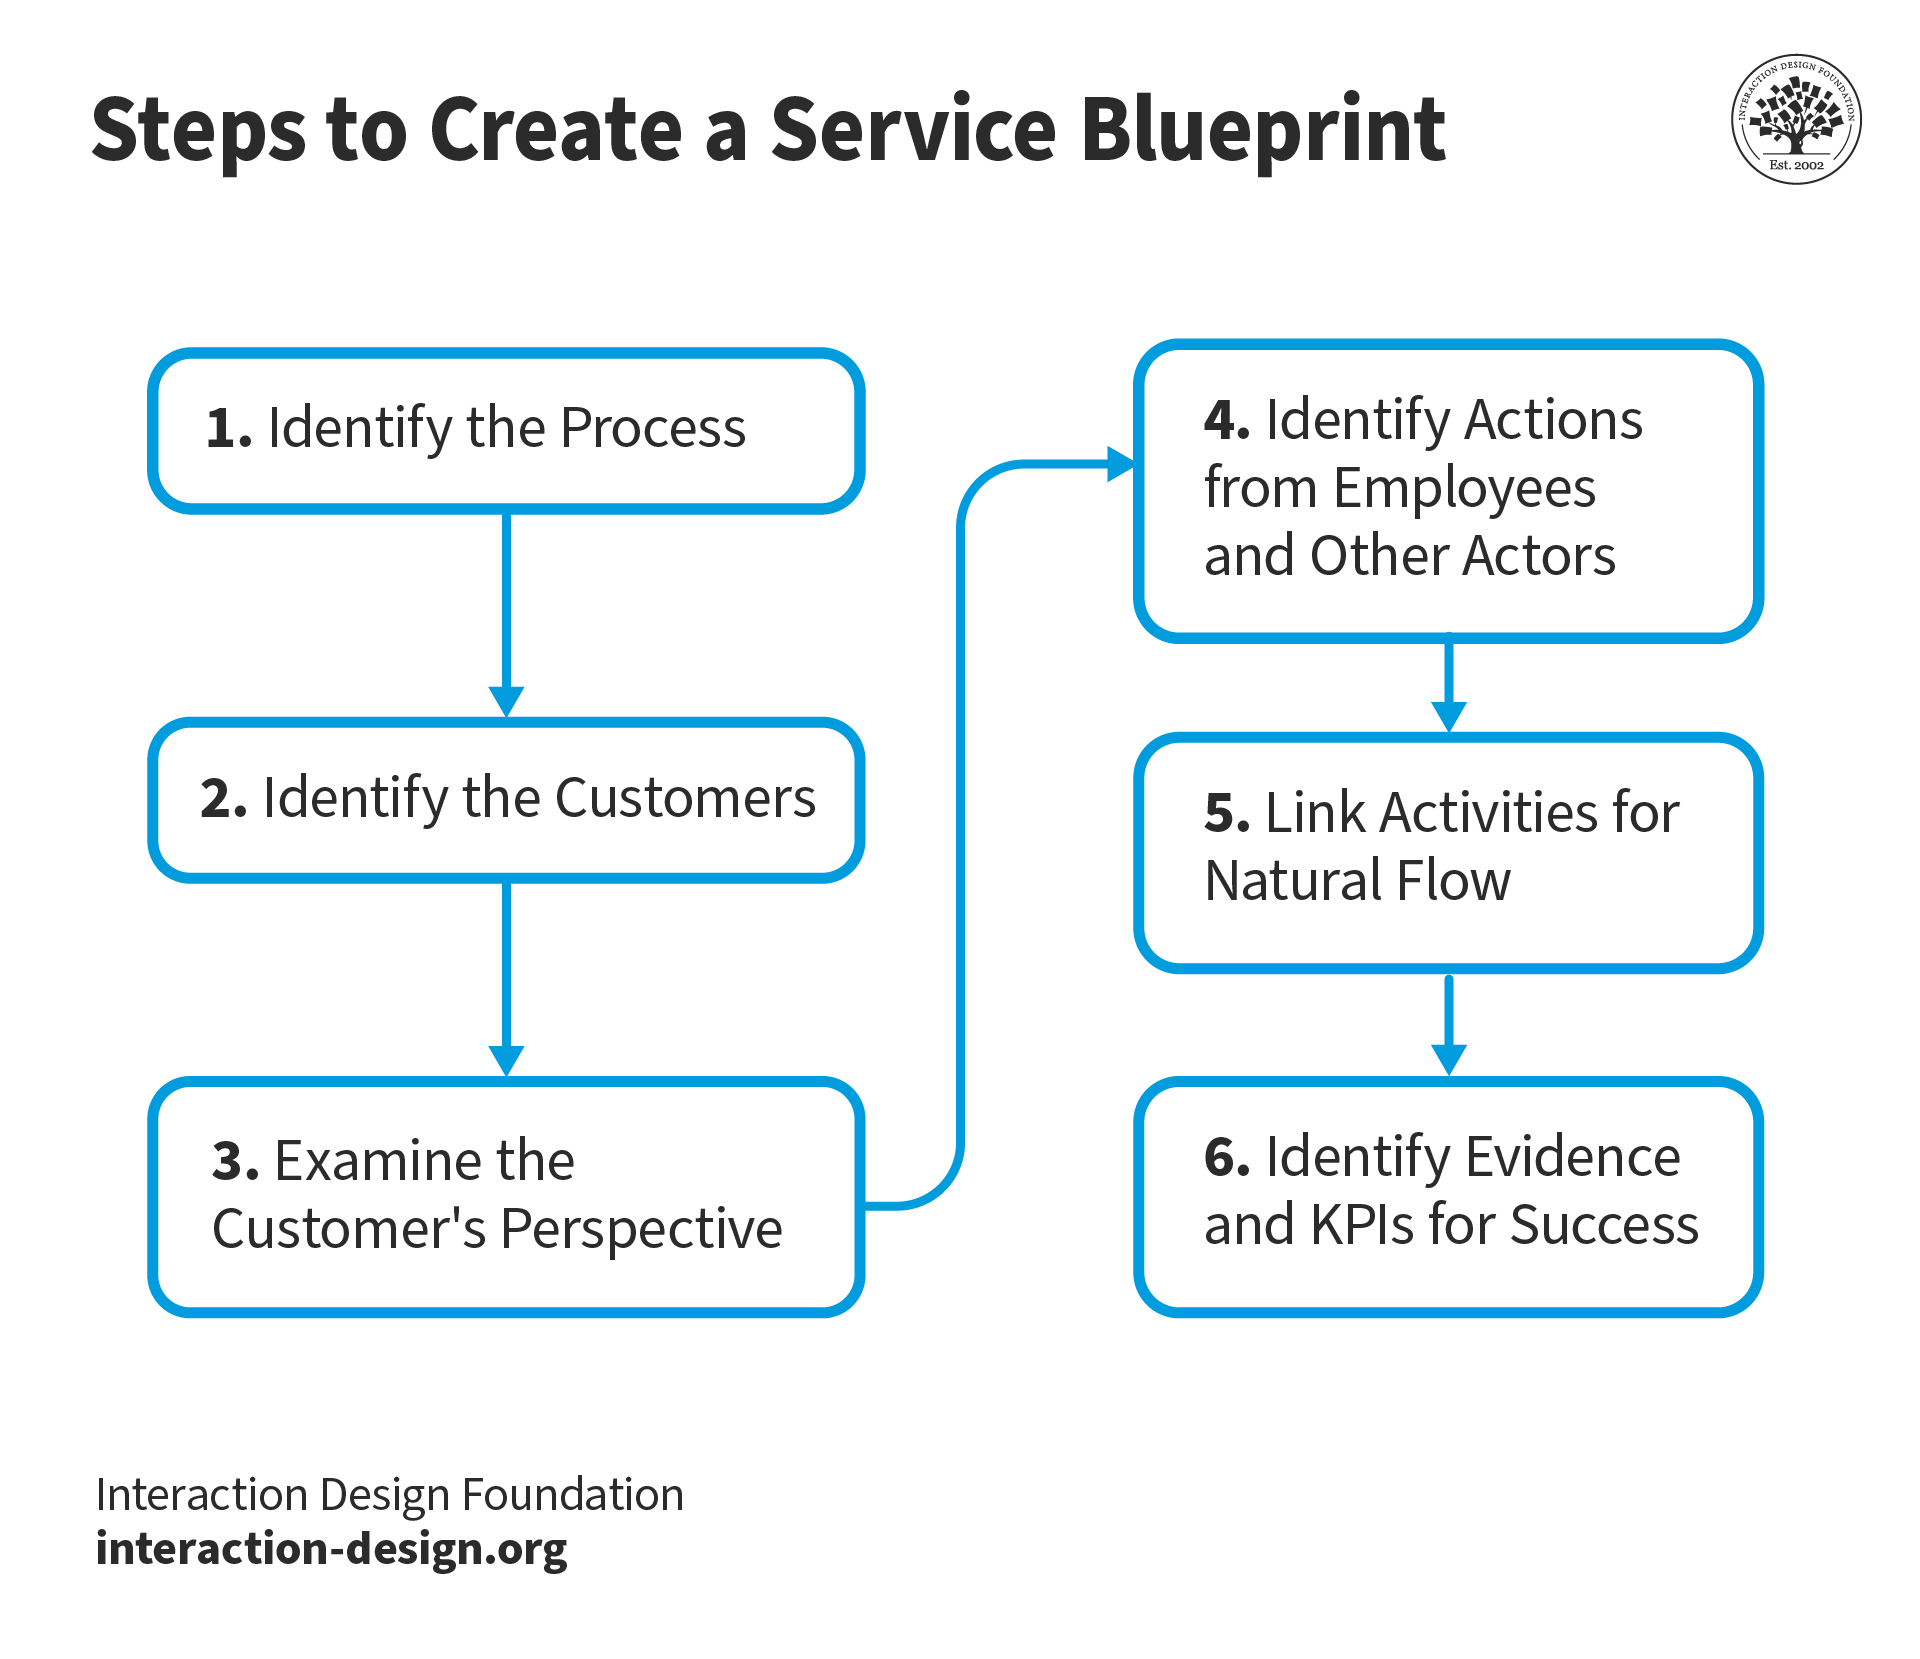 Steps to create a service blueprint